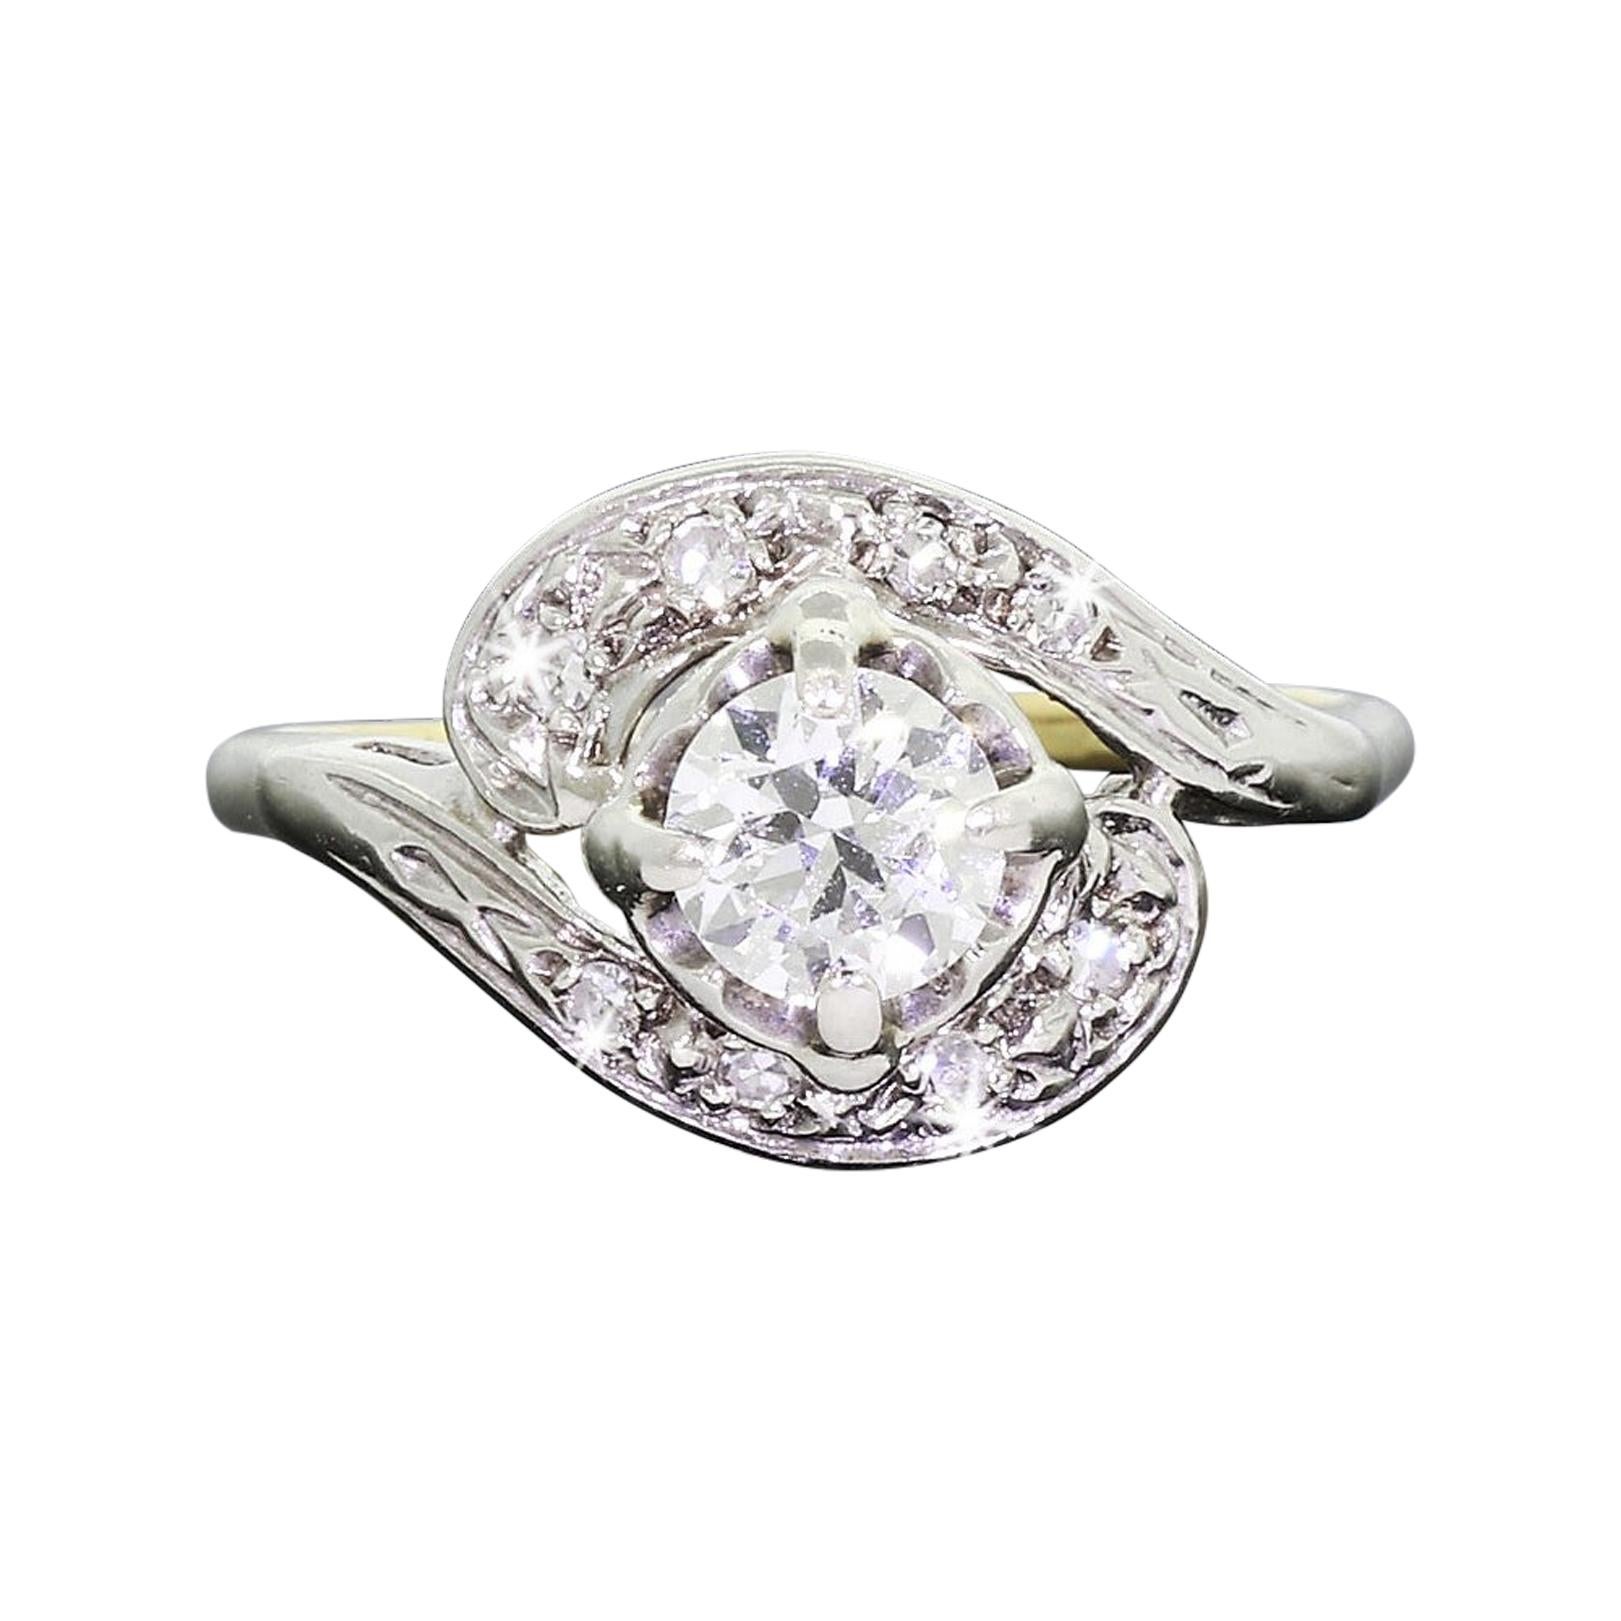 Vintage 1950s 14 Karat Gold Diamond Engagement Ring 0.50 Carat Center VS1 /2